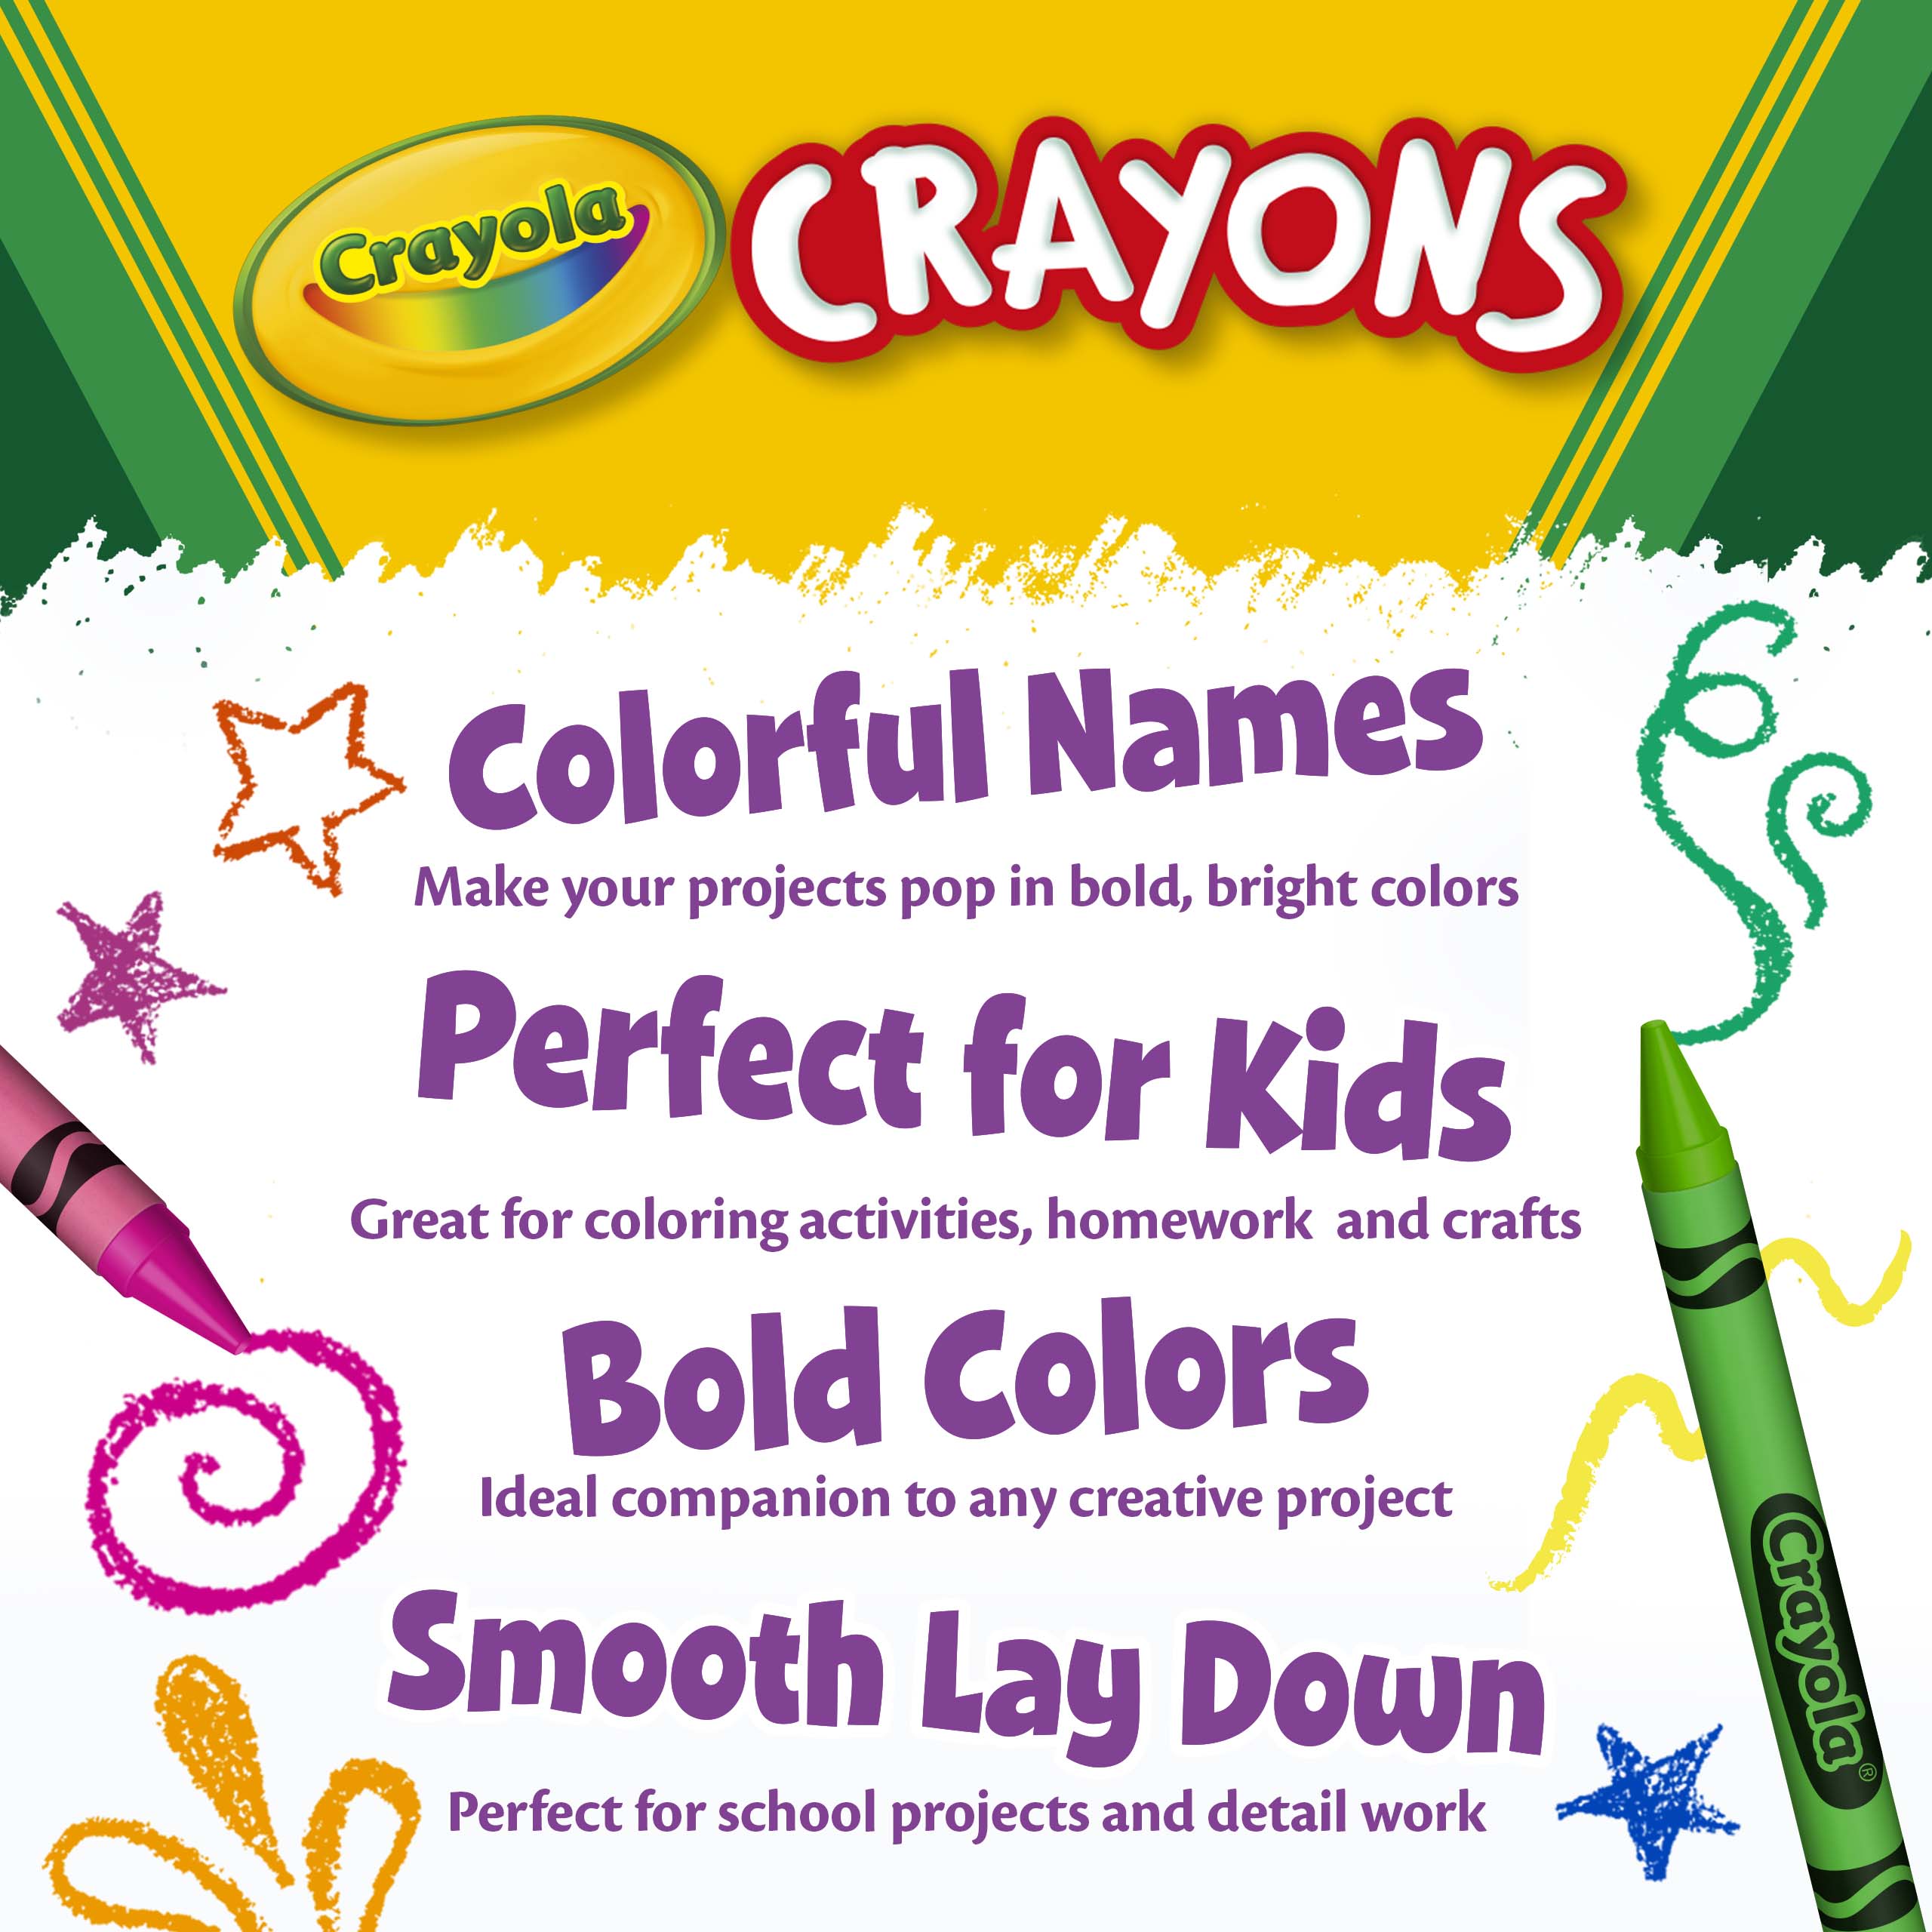 Crayola Glitter Crayons, 16 Count